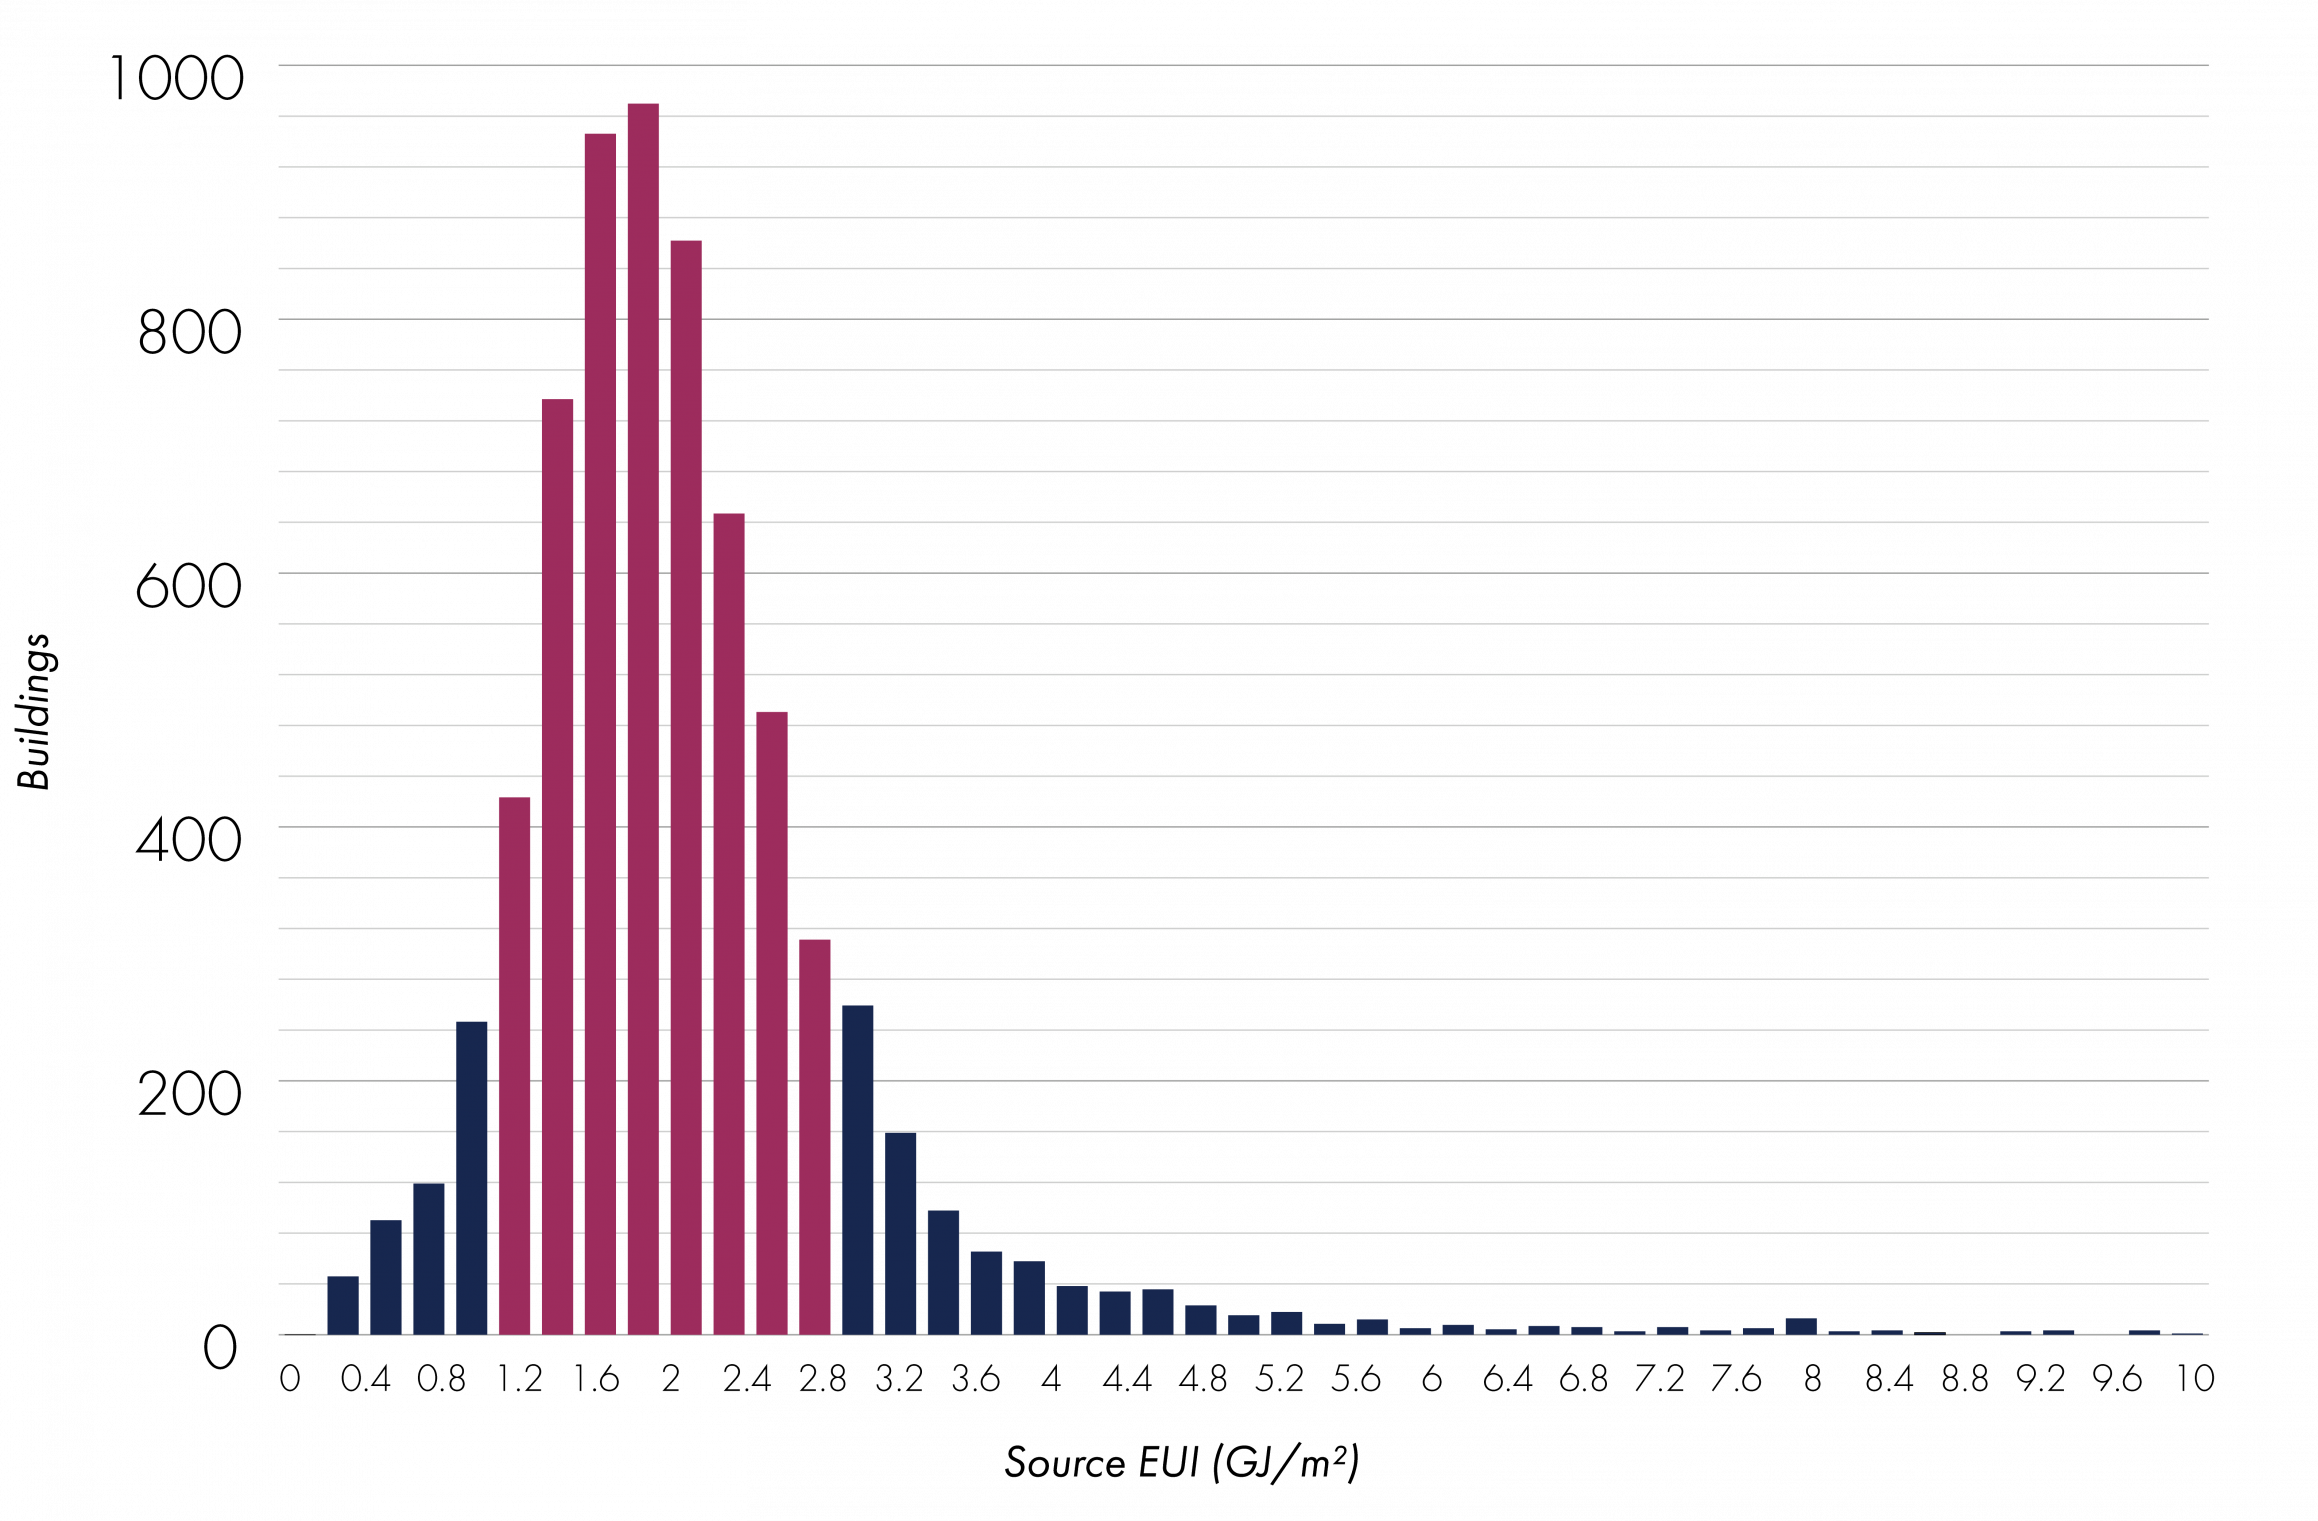 Bar graph - Energy intensity distribution